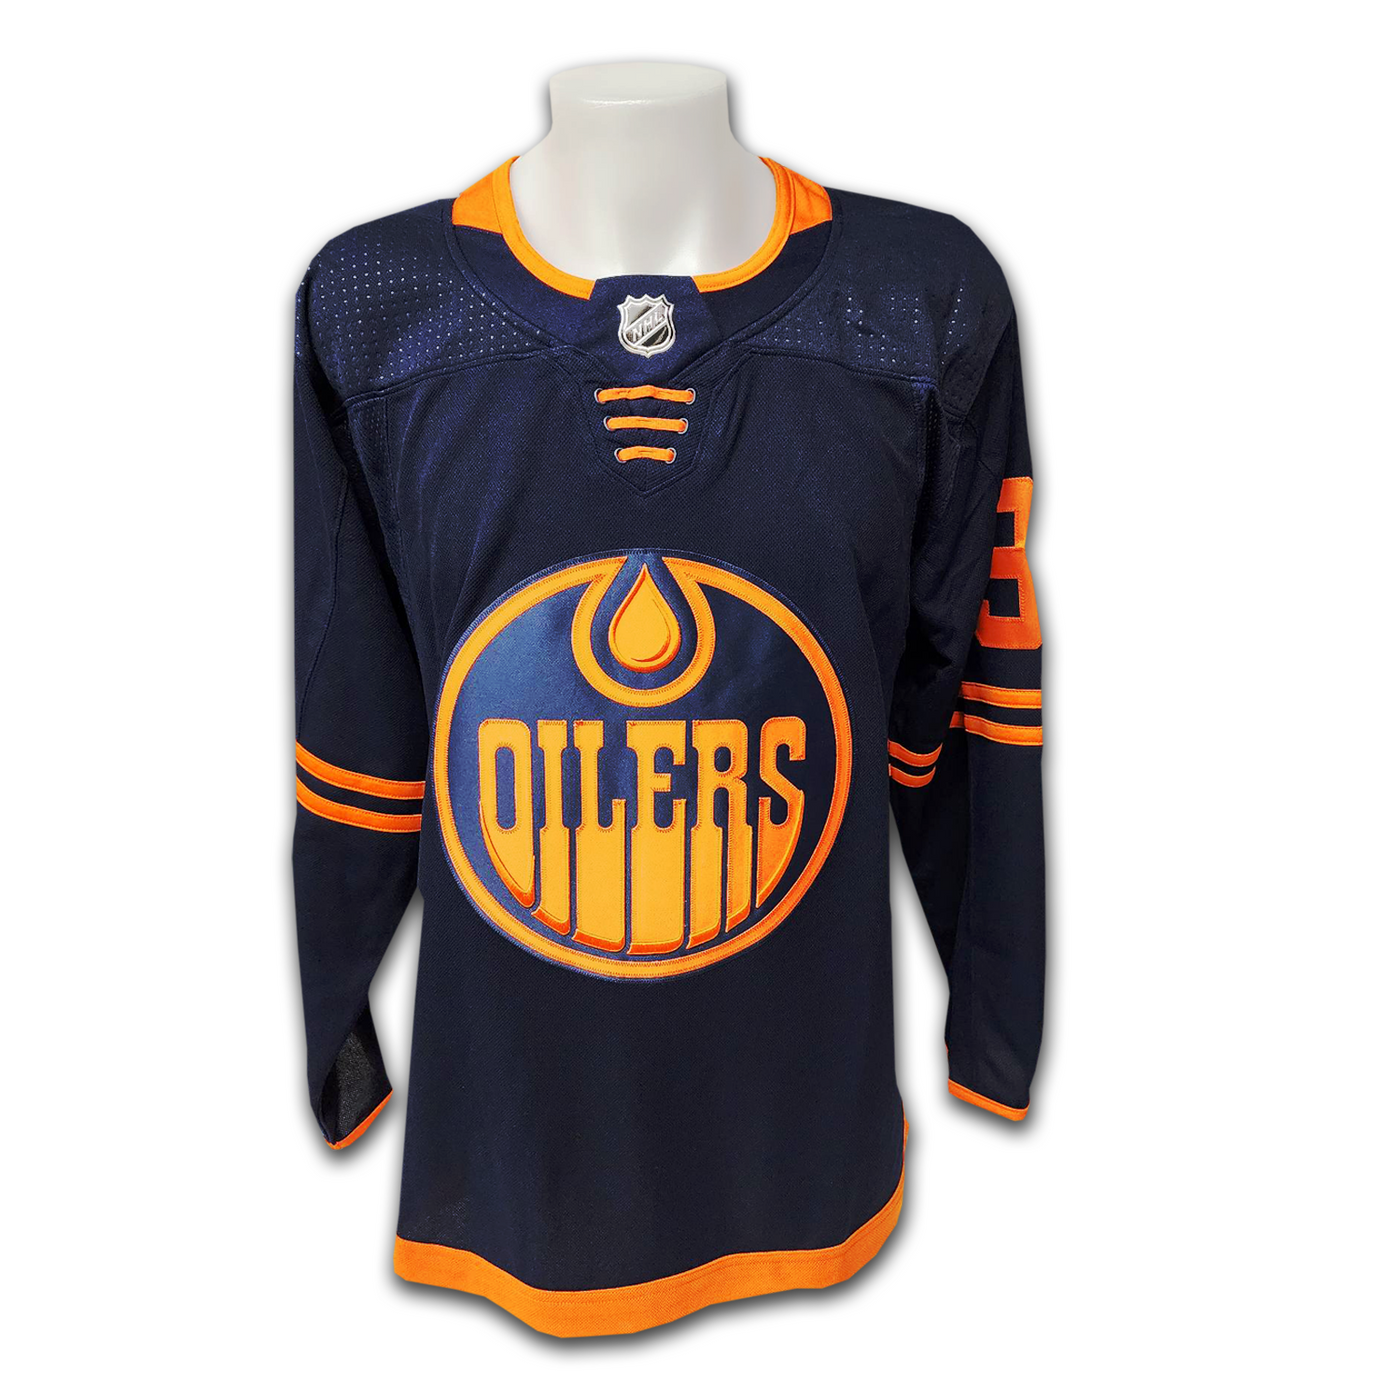 Evander Kane Edmonton Oilers Alternate Adidas Jersey